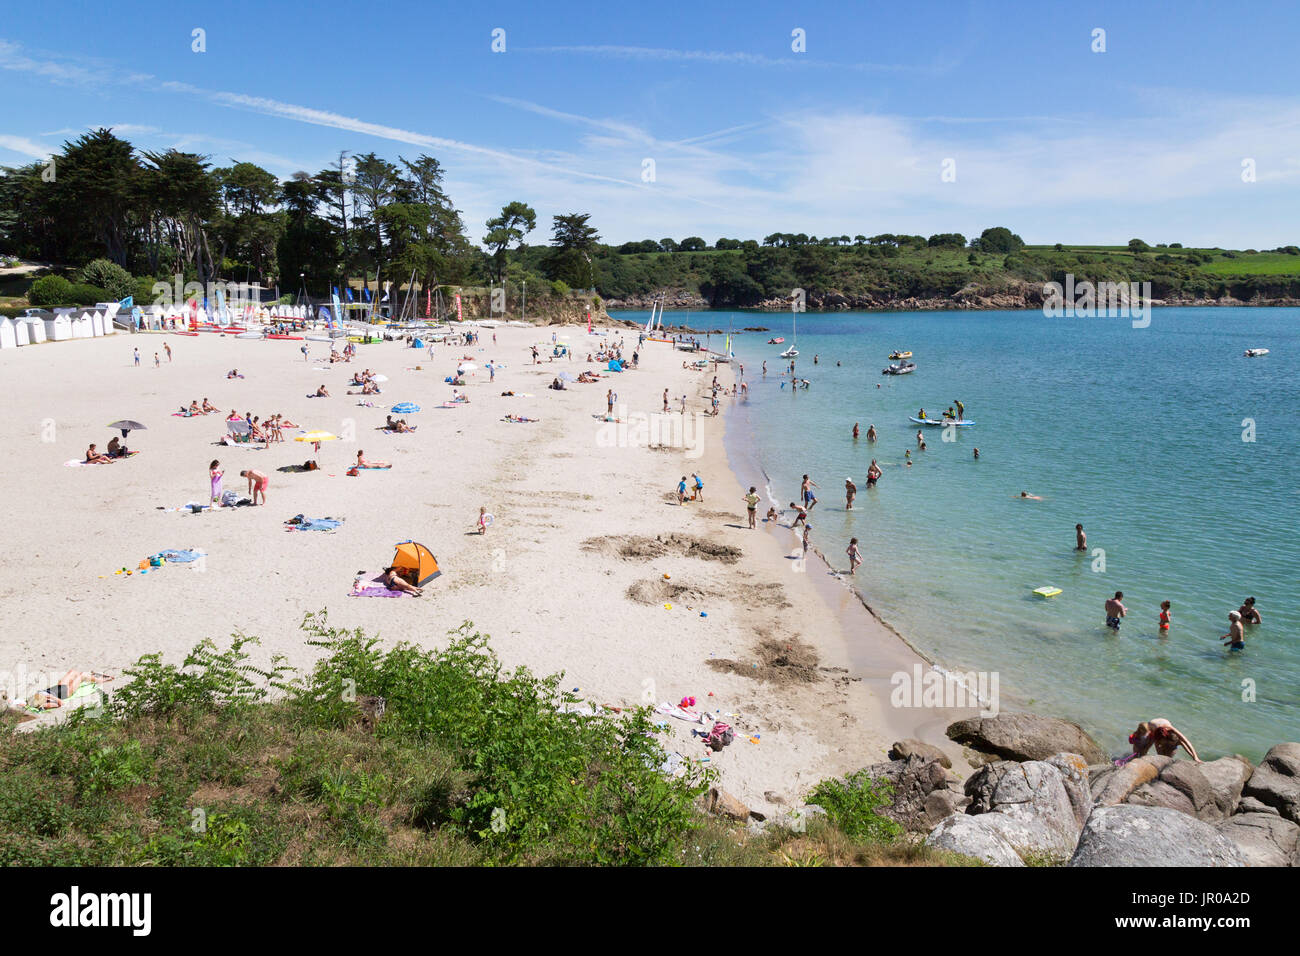 Frankreich - Touristen am Strand beim Sonnenbaden auf Port Manec'h Strand, Finistere, Bretagne Nordfrankreich Europa Stockfoto